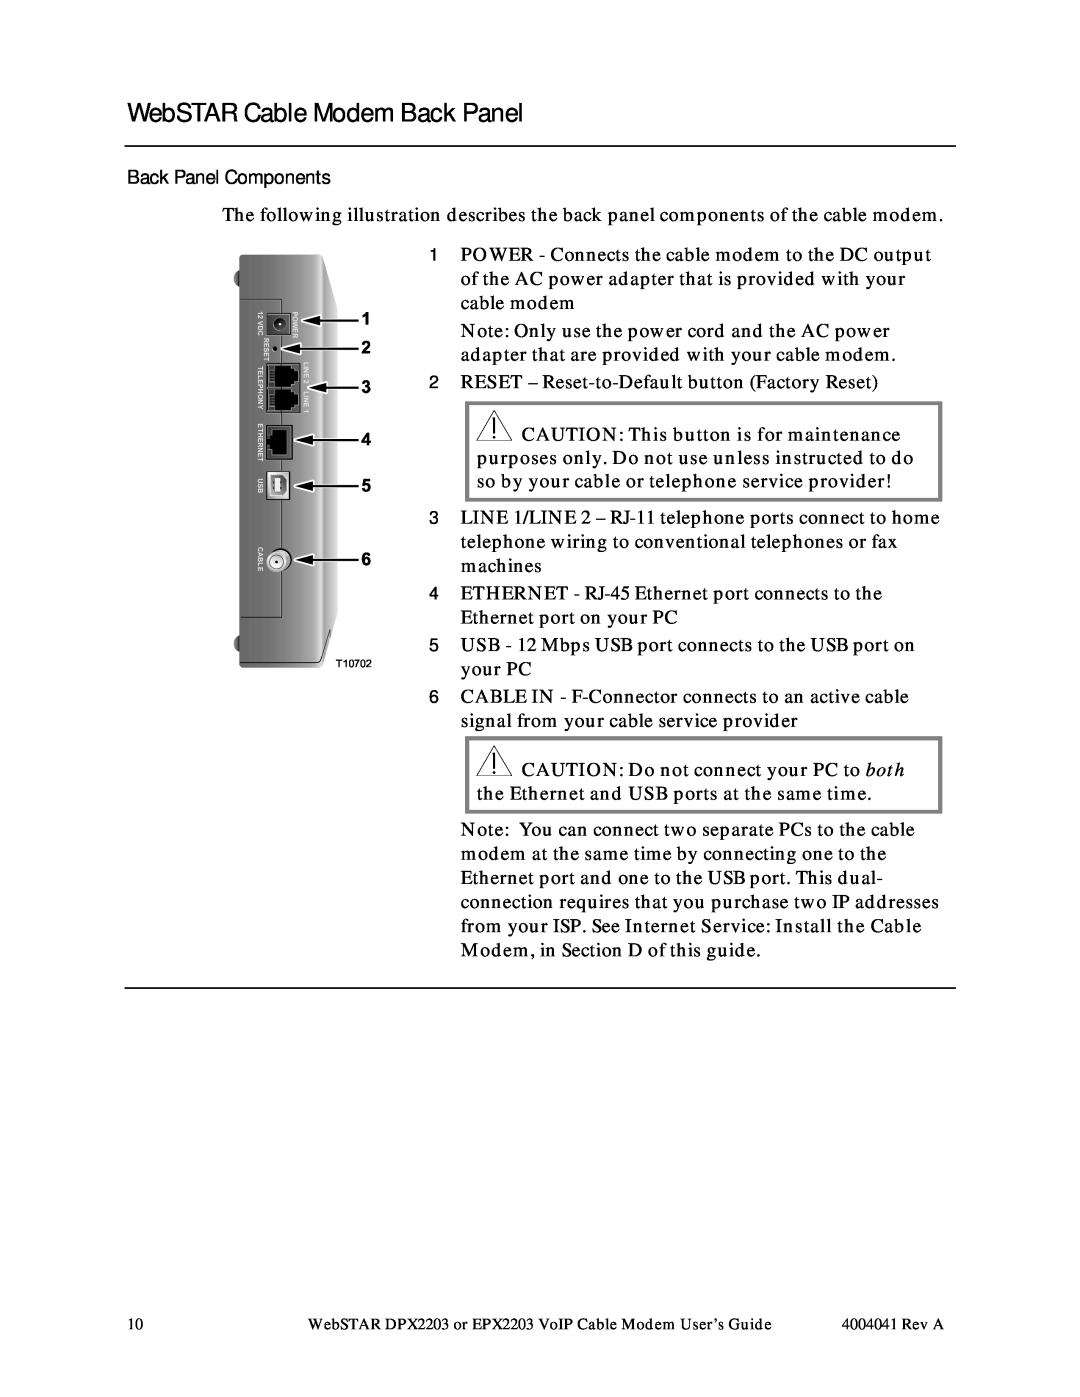 Scientific Atlanta EPX2203, DPX2203 manual WebSTAR Cable Modem Back Panel, Back Panel Components 